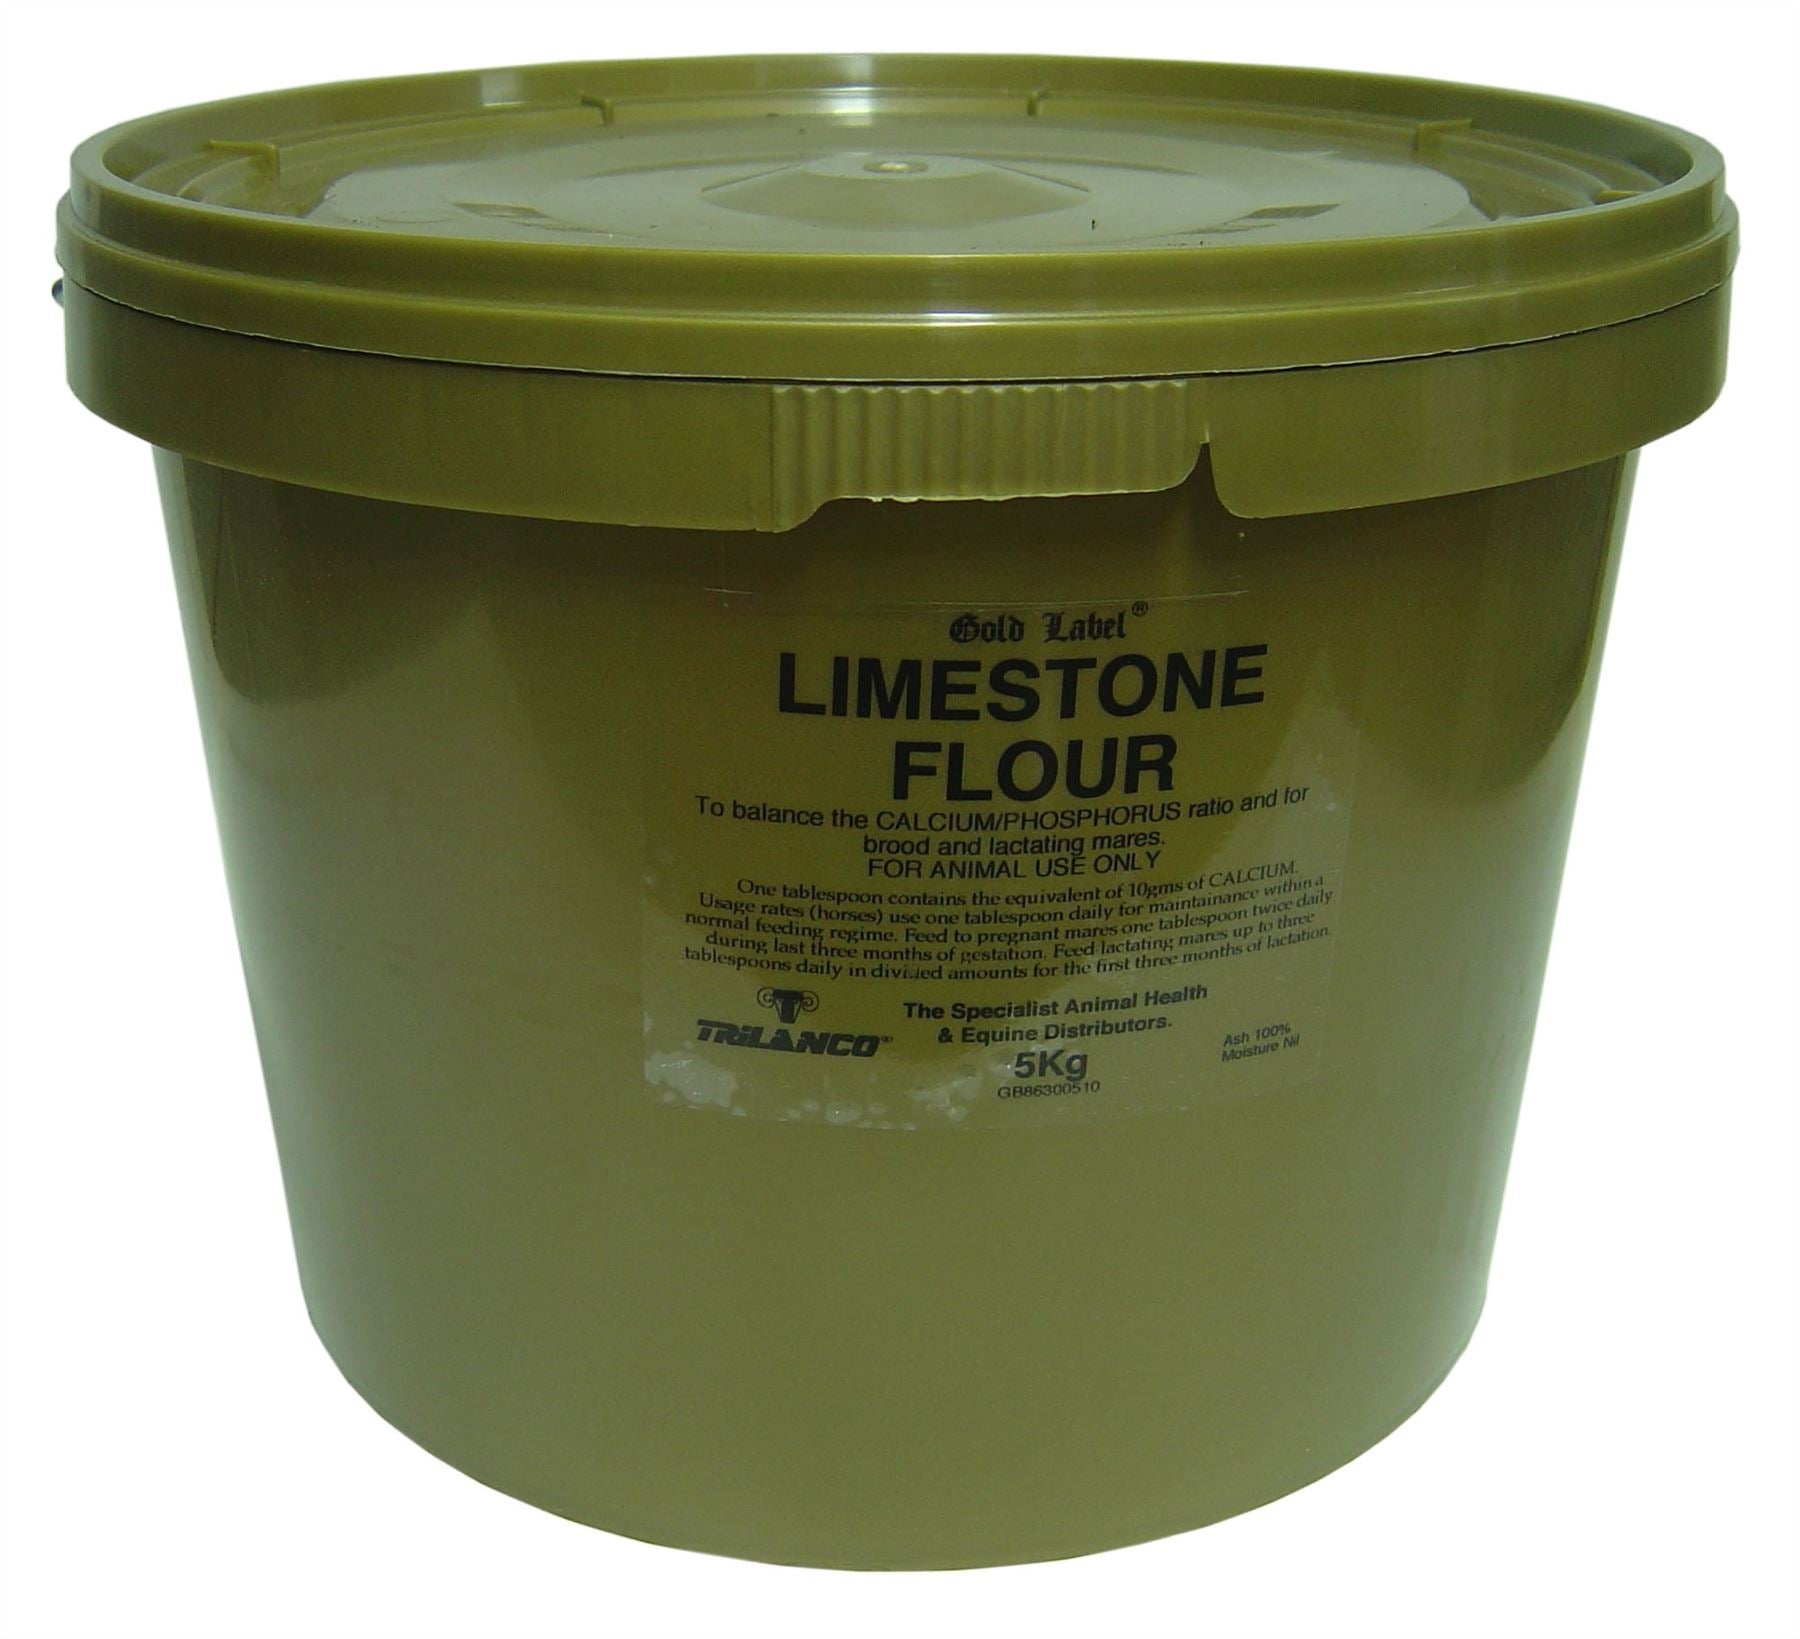 Gold Label Limestone Flour - Just Horse Riders